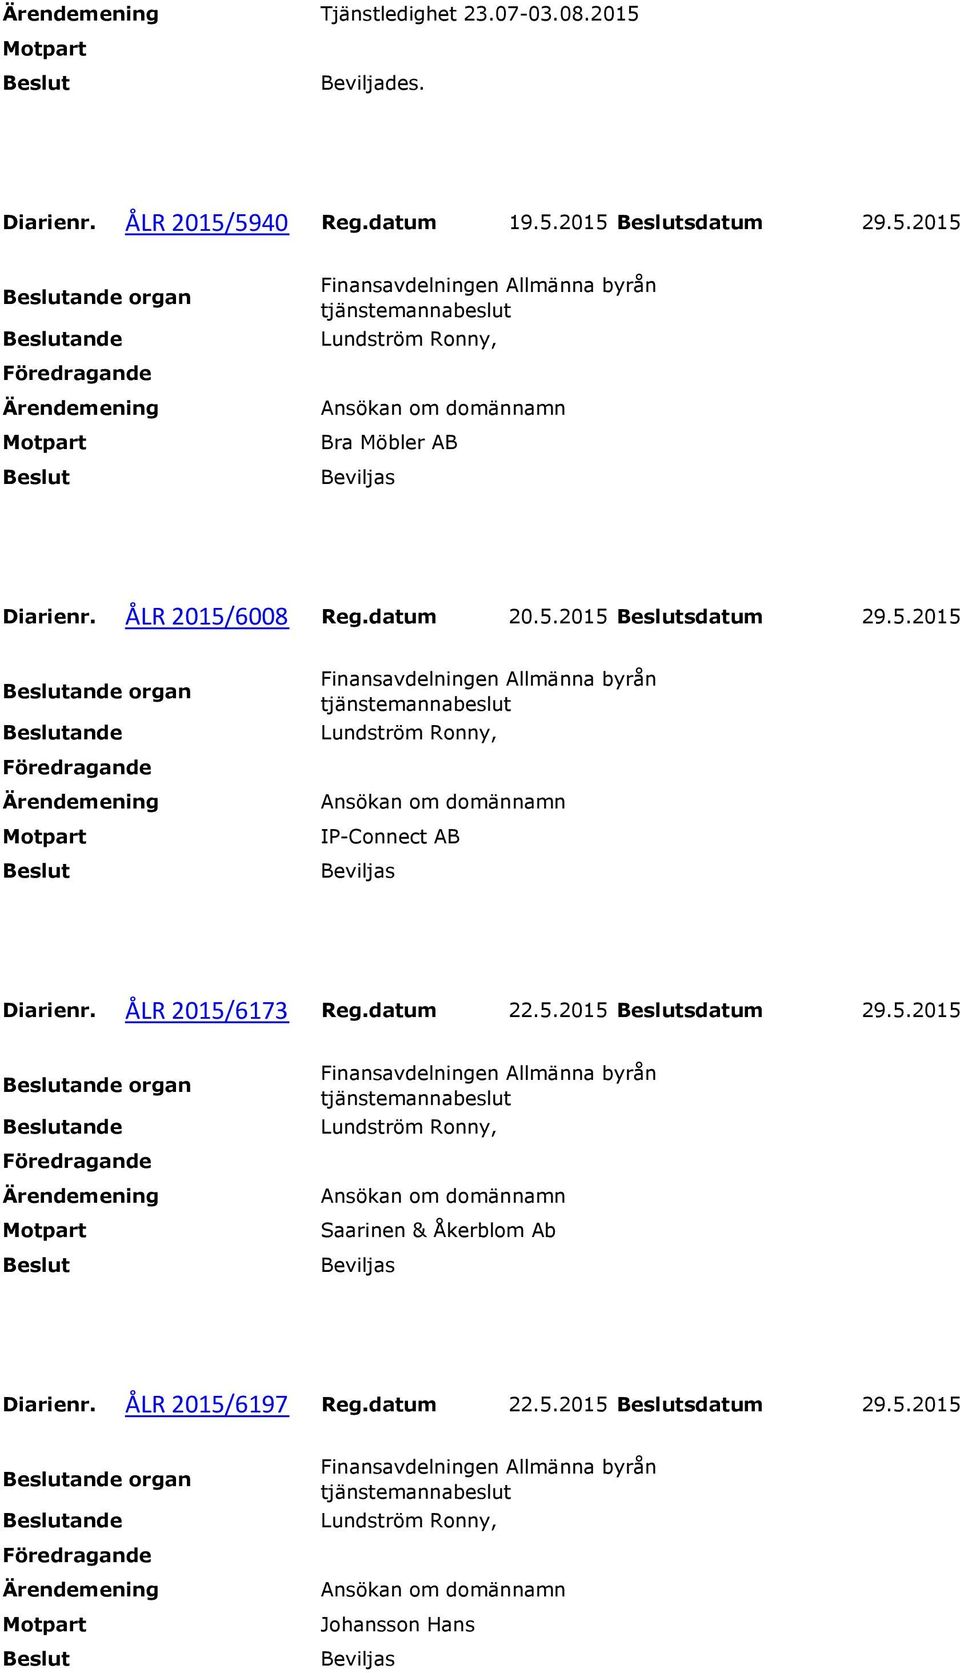 ÅLR 2015/6173 Reg.datum 22.5.2015 sdatum 29.5.2015 Saarinen & Åkerblom Ab Diarienr.